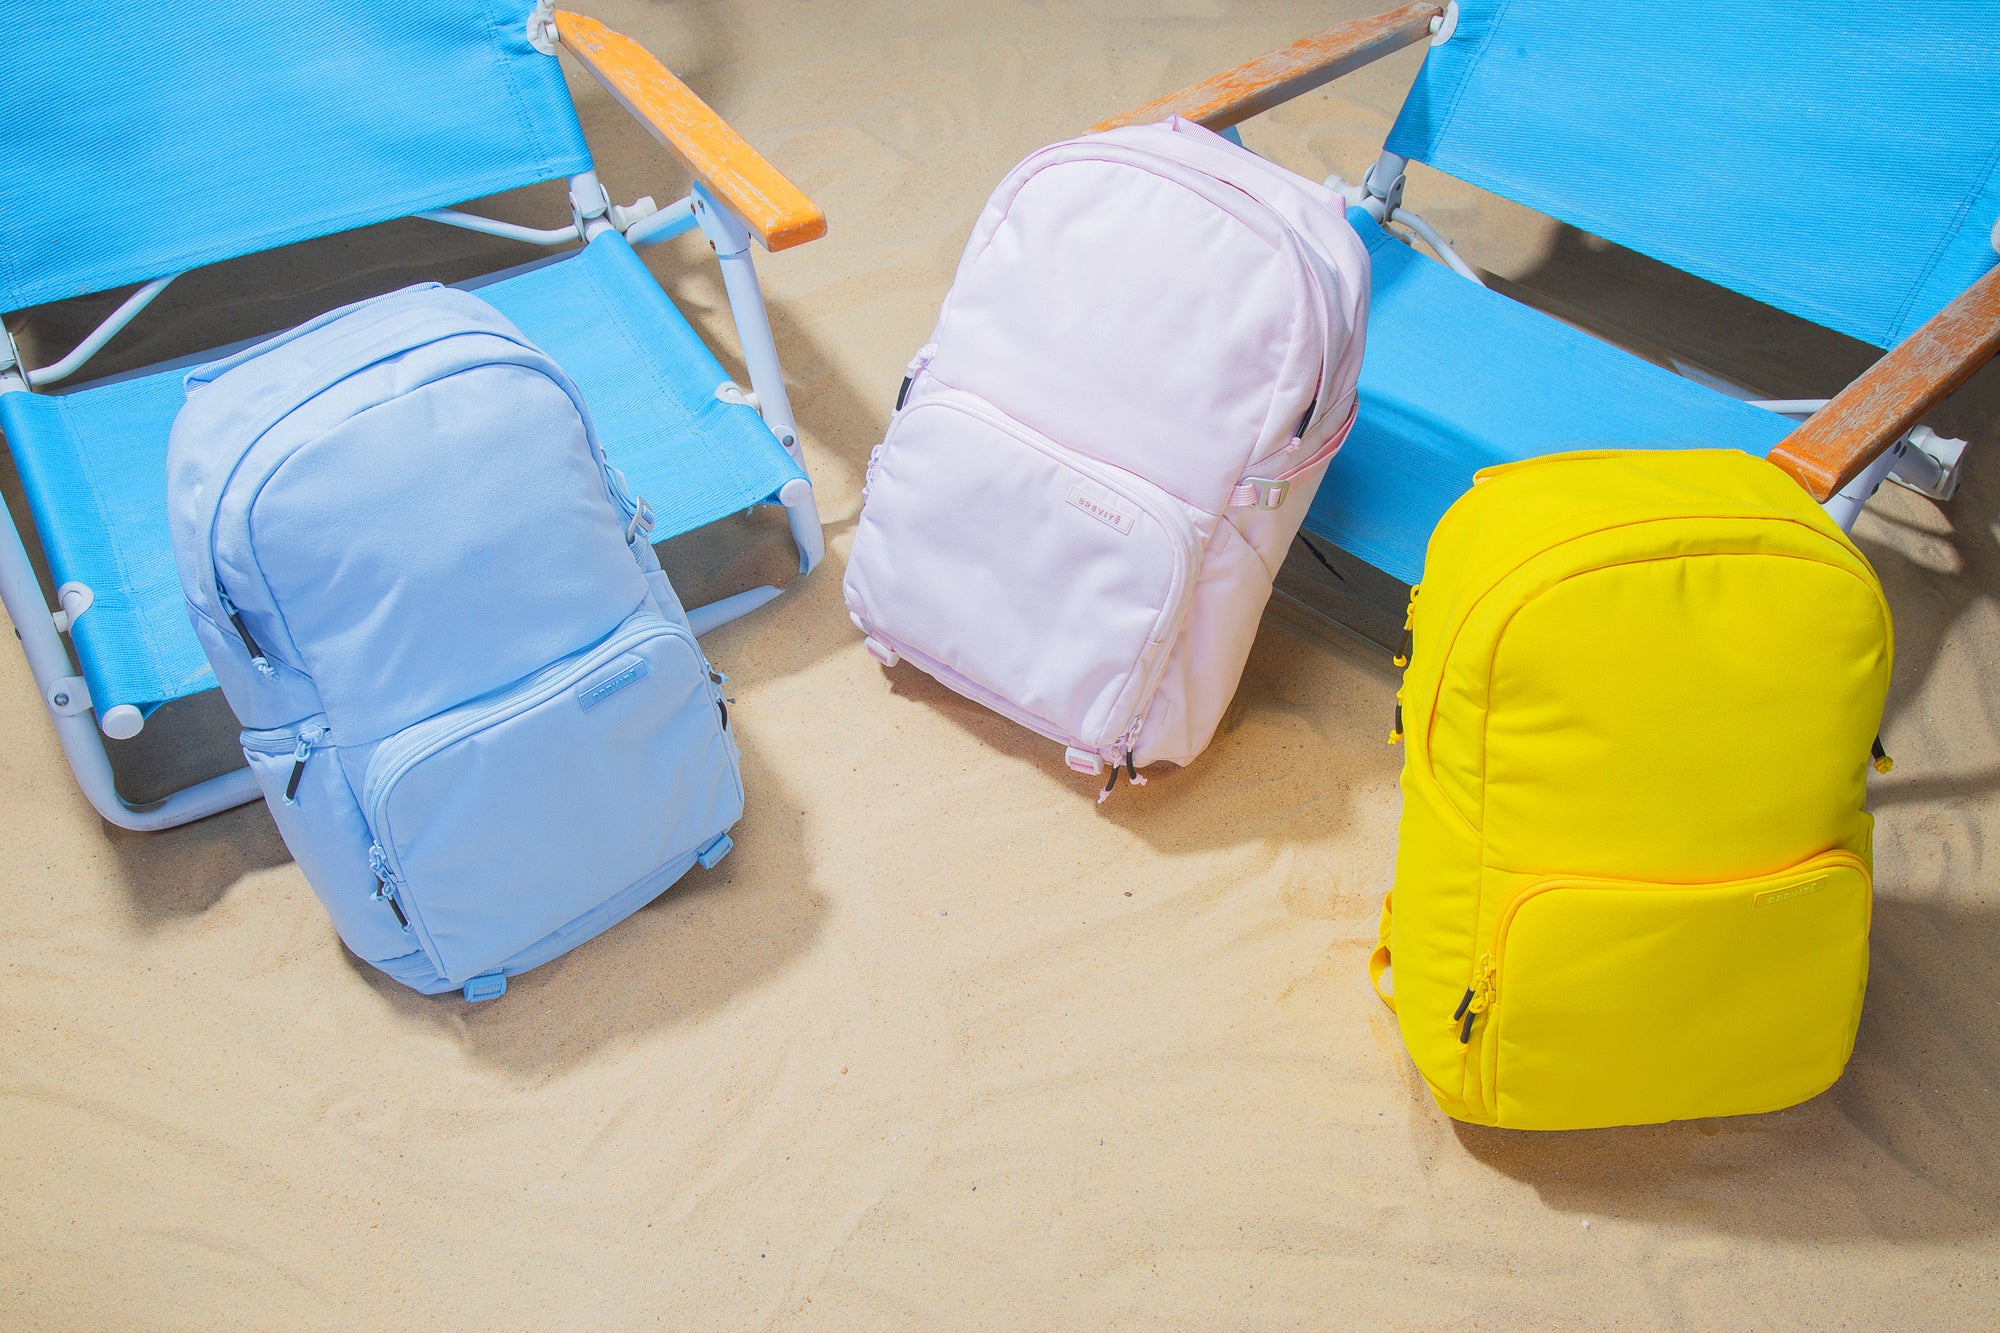 Brevite backpack at beach